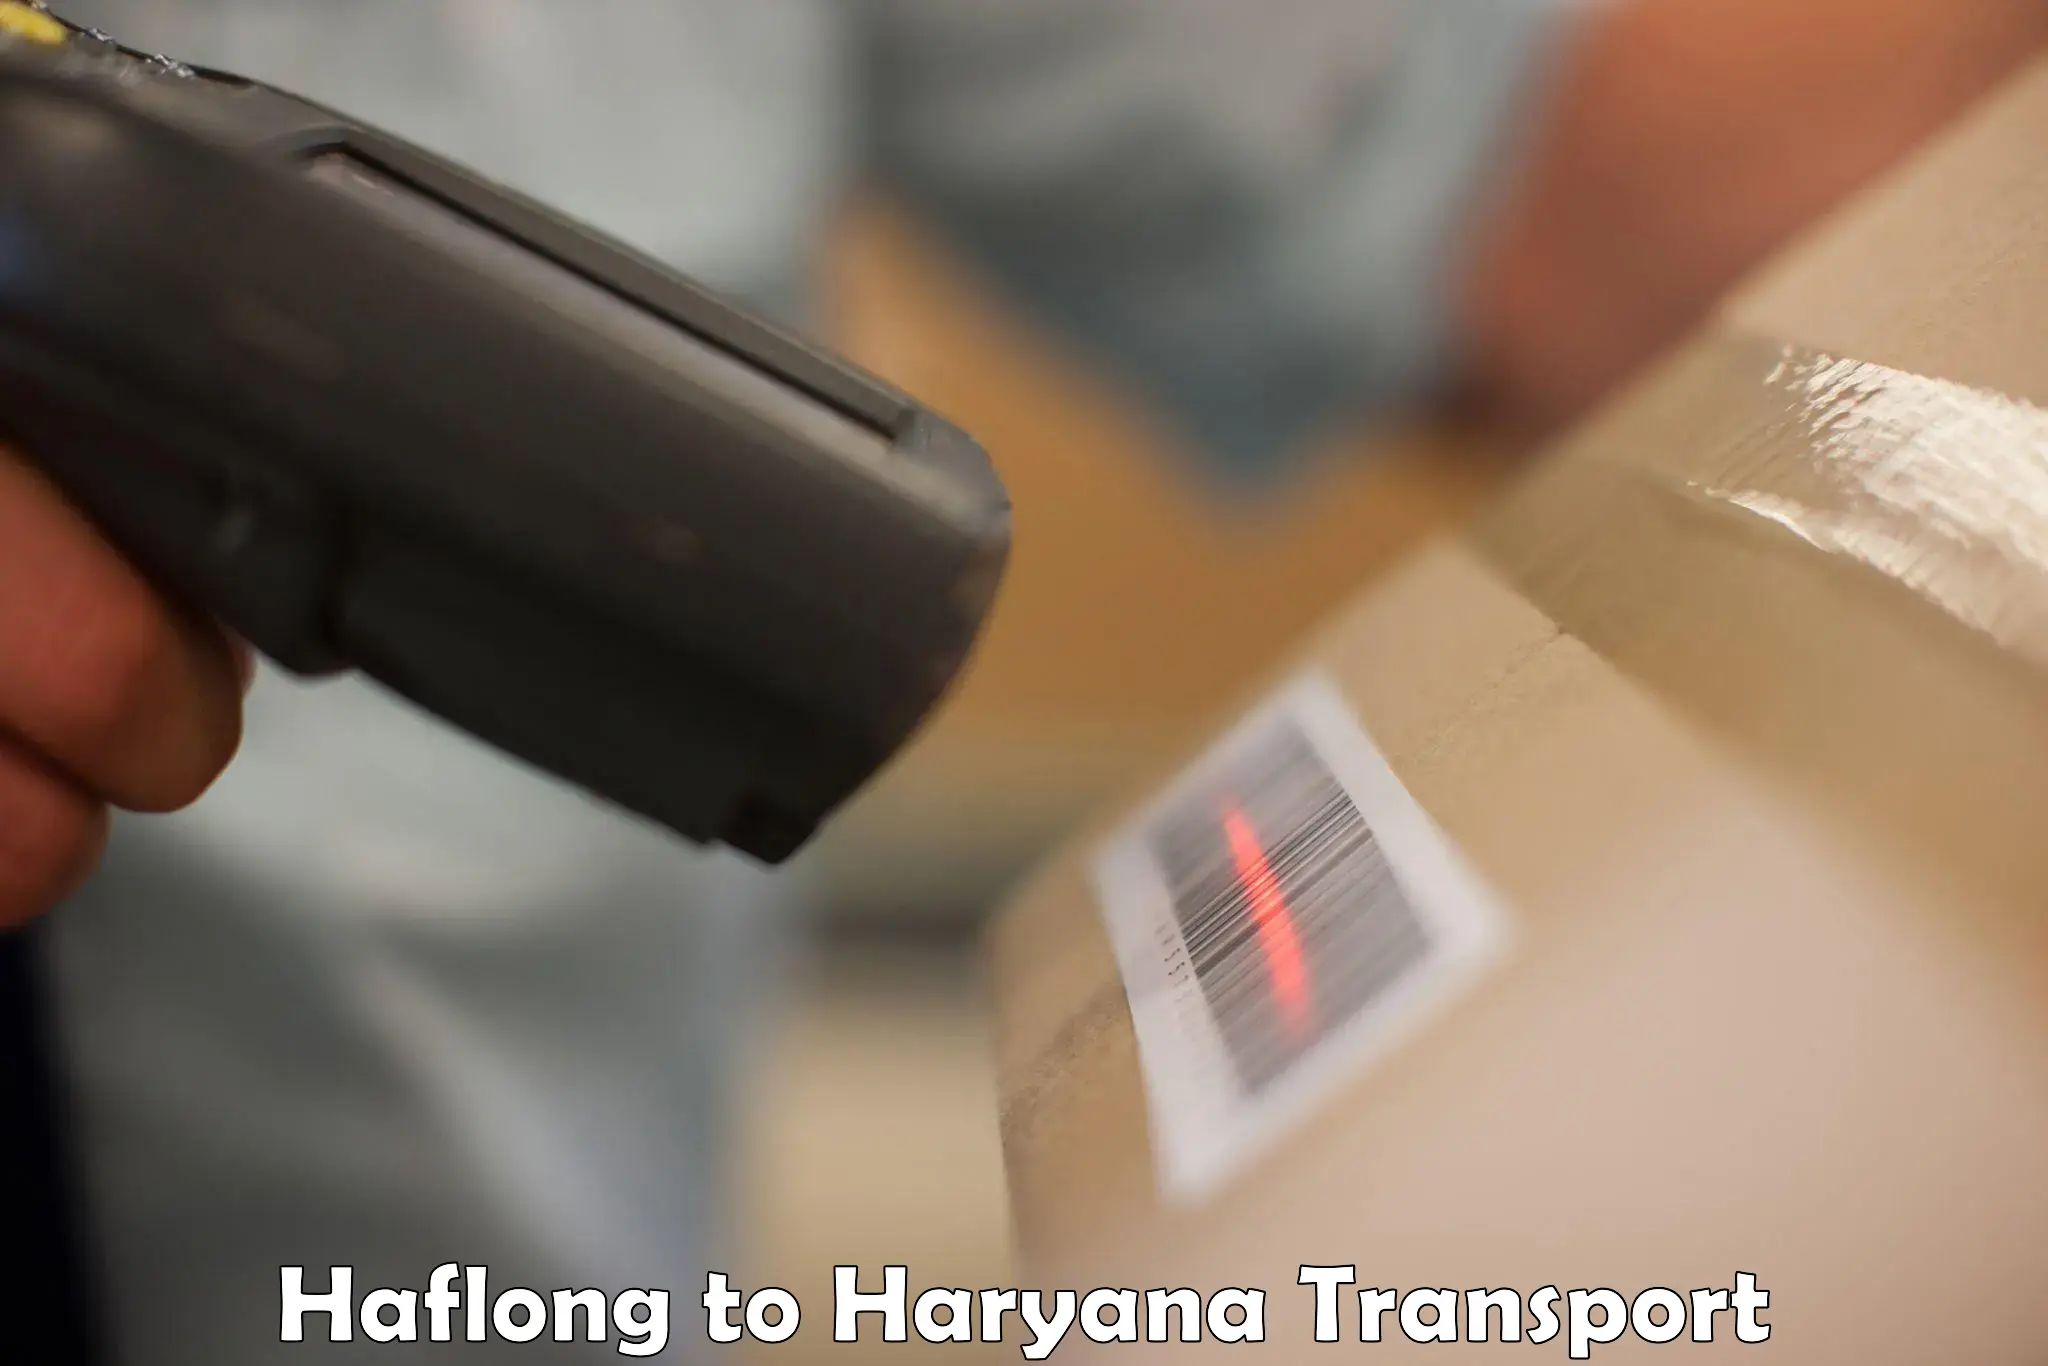 Transport in sharing Haflong to Haryana